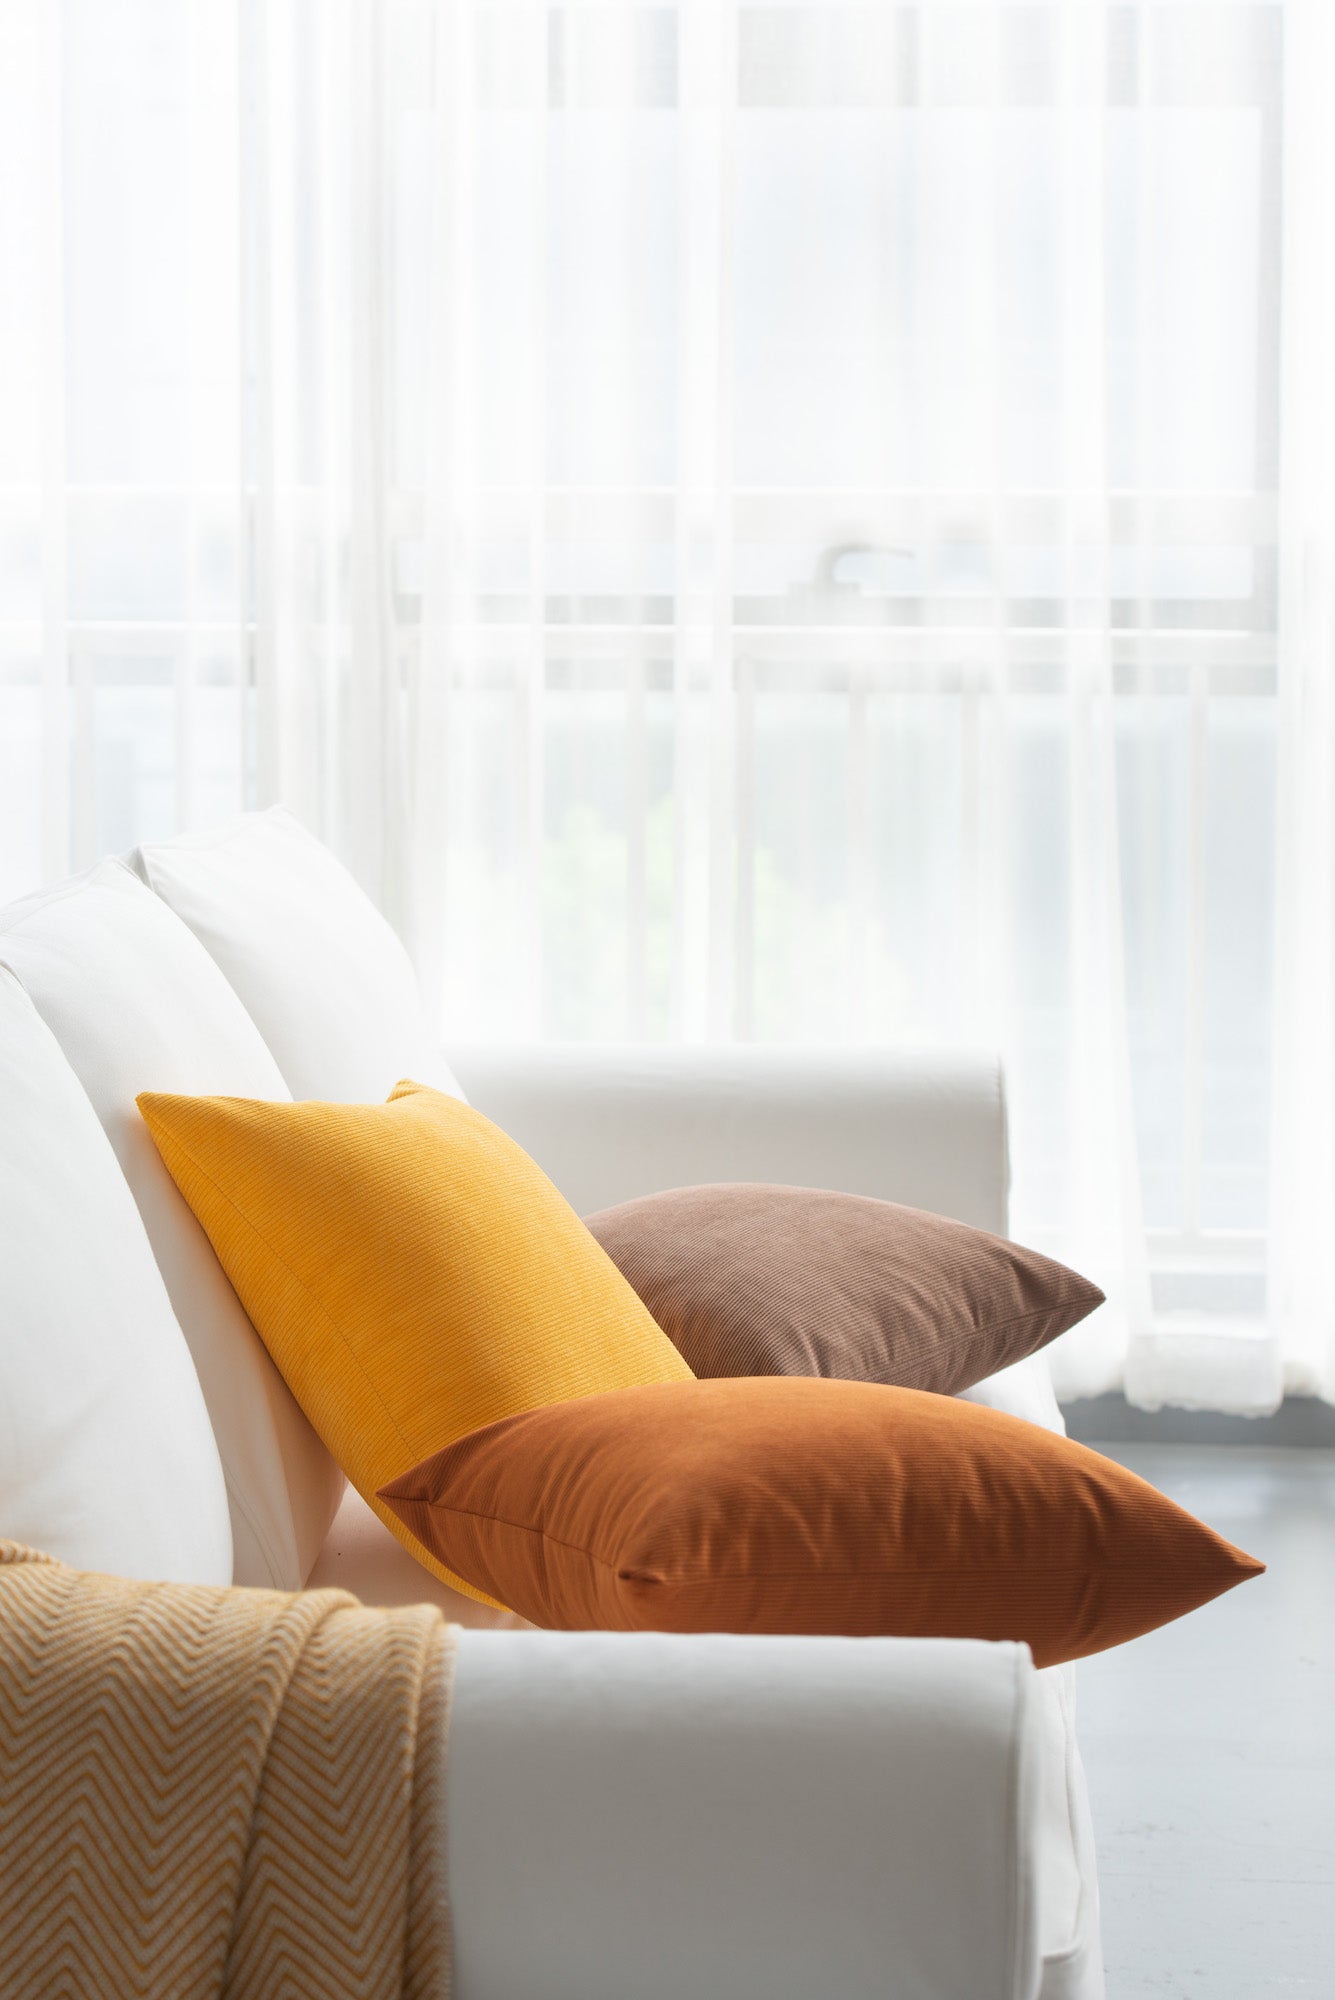 Modern Pillow Cover, Corduroy, Mustard Yellow, 18" x18"